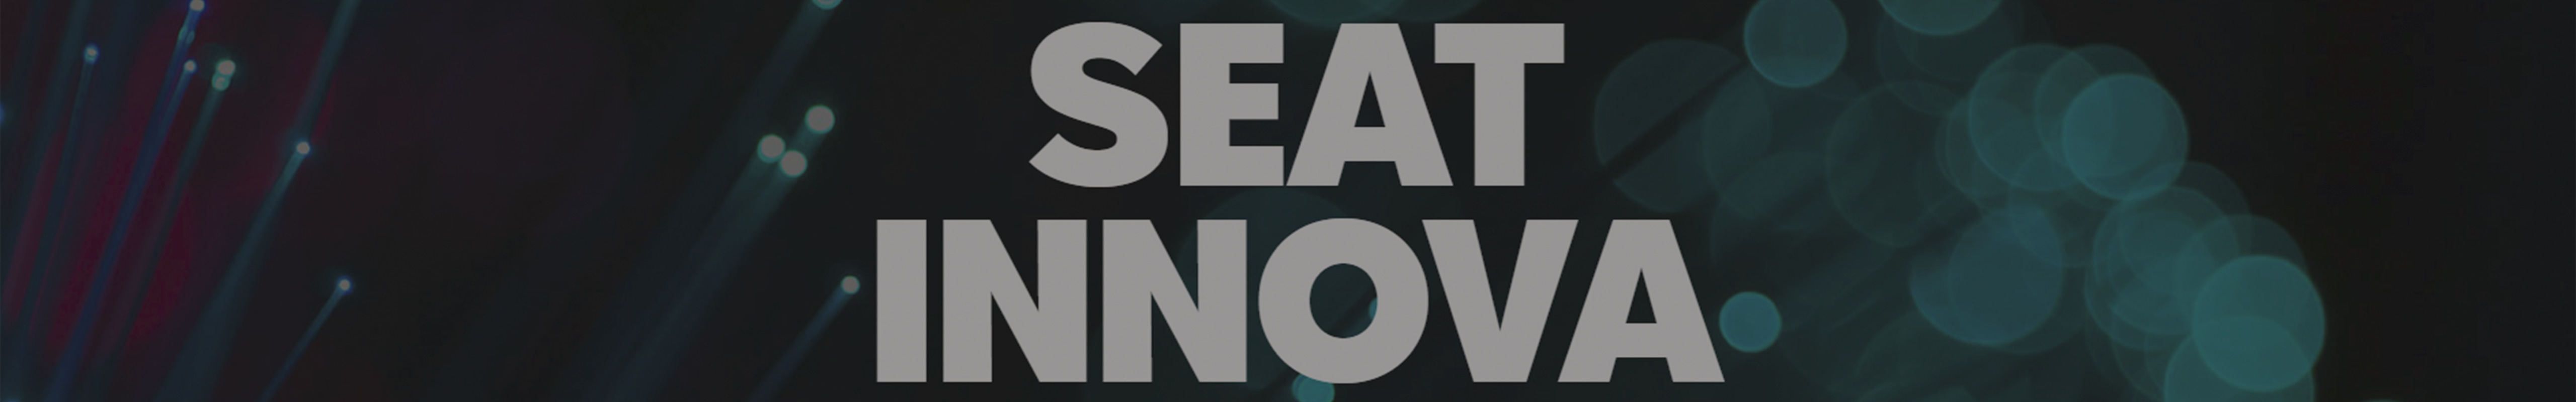 SEAT’s innovation platform.